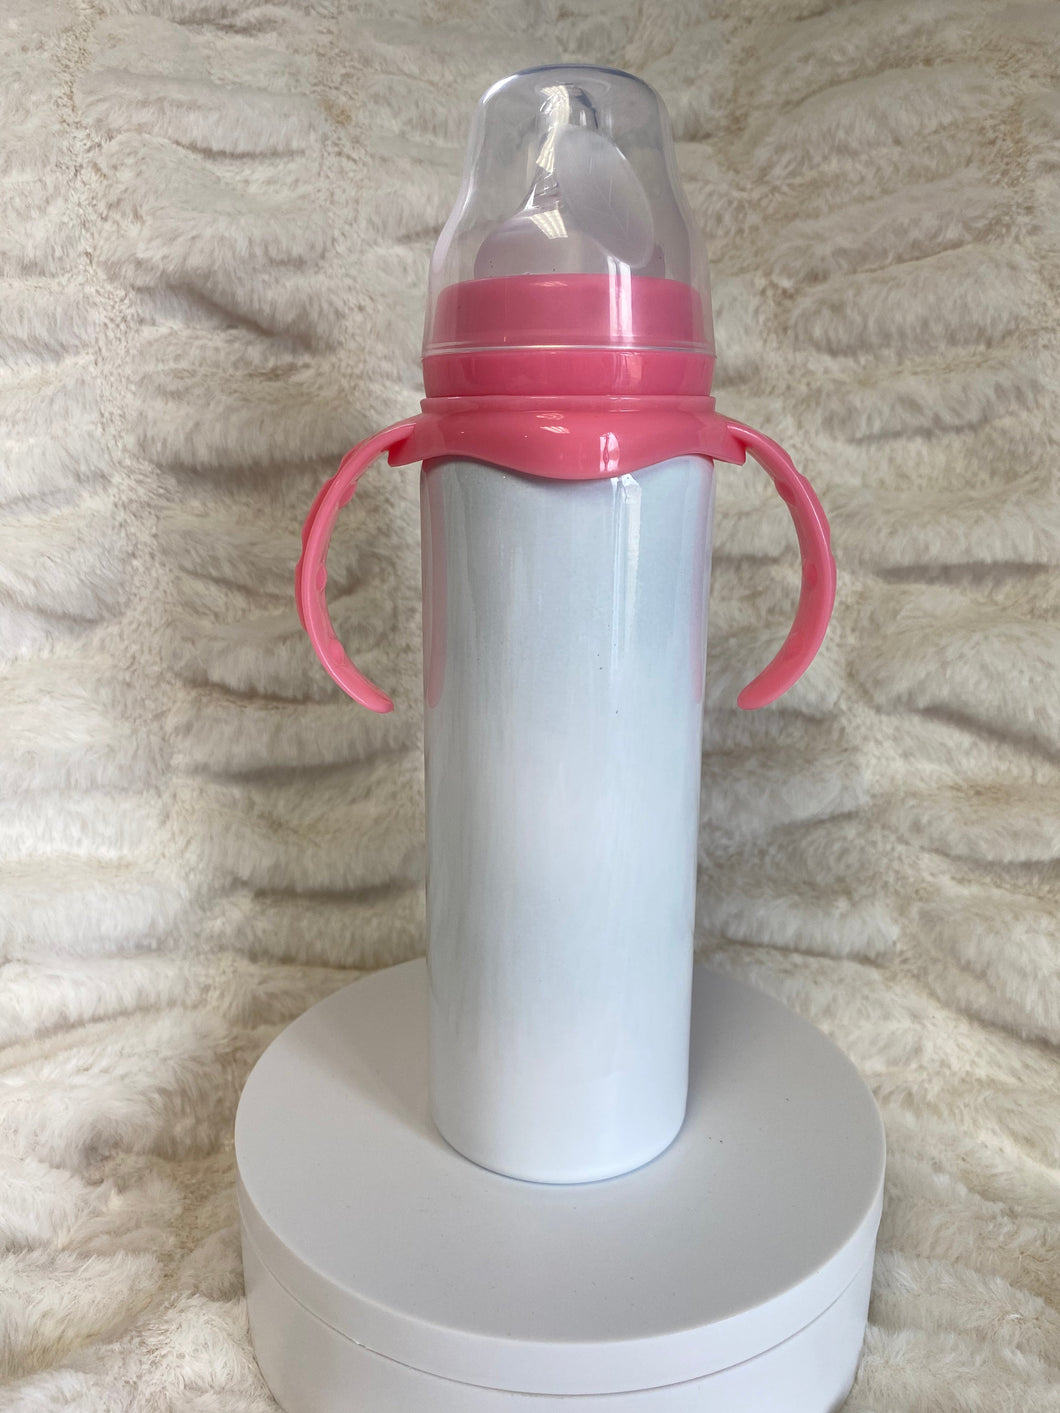 Space baby bottle tumbler